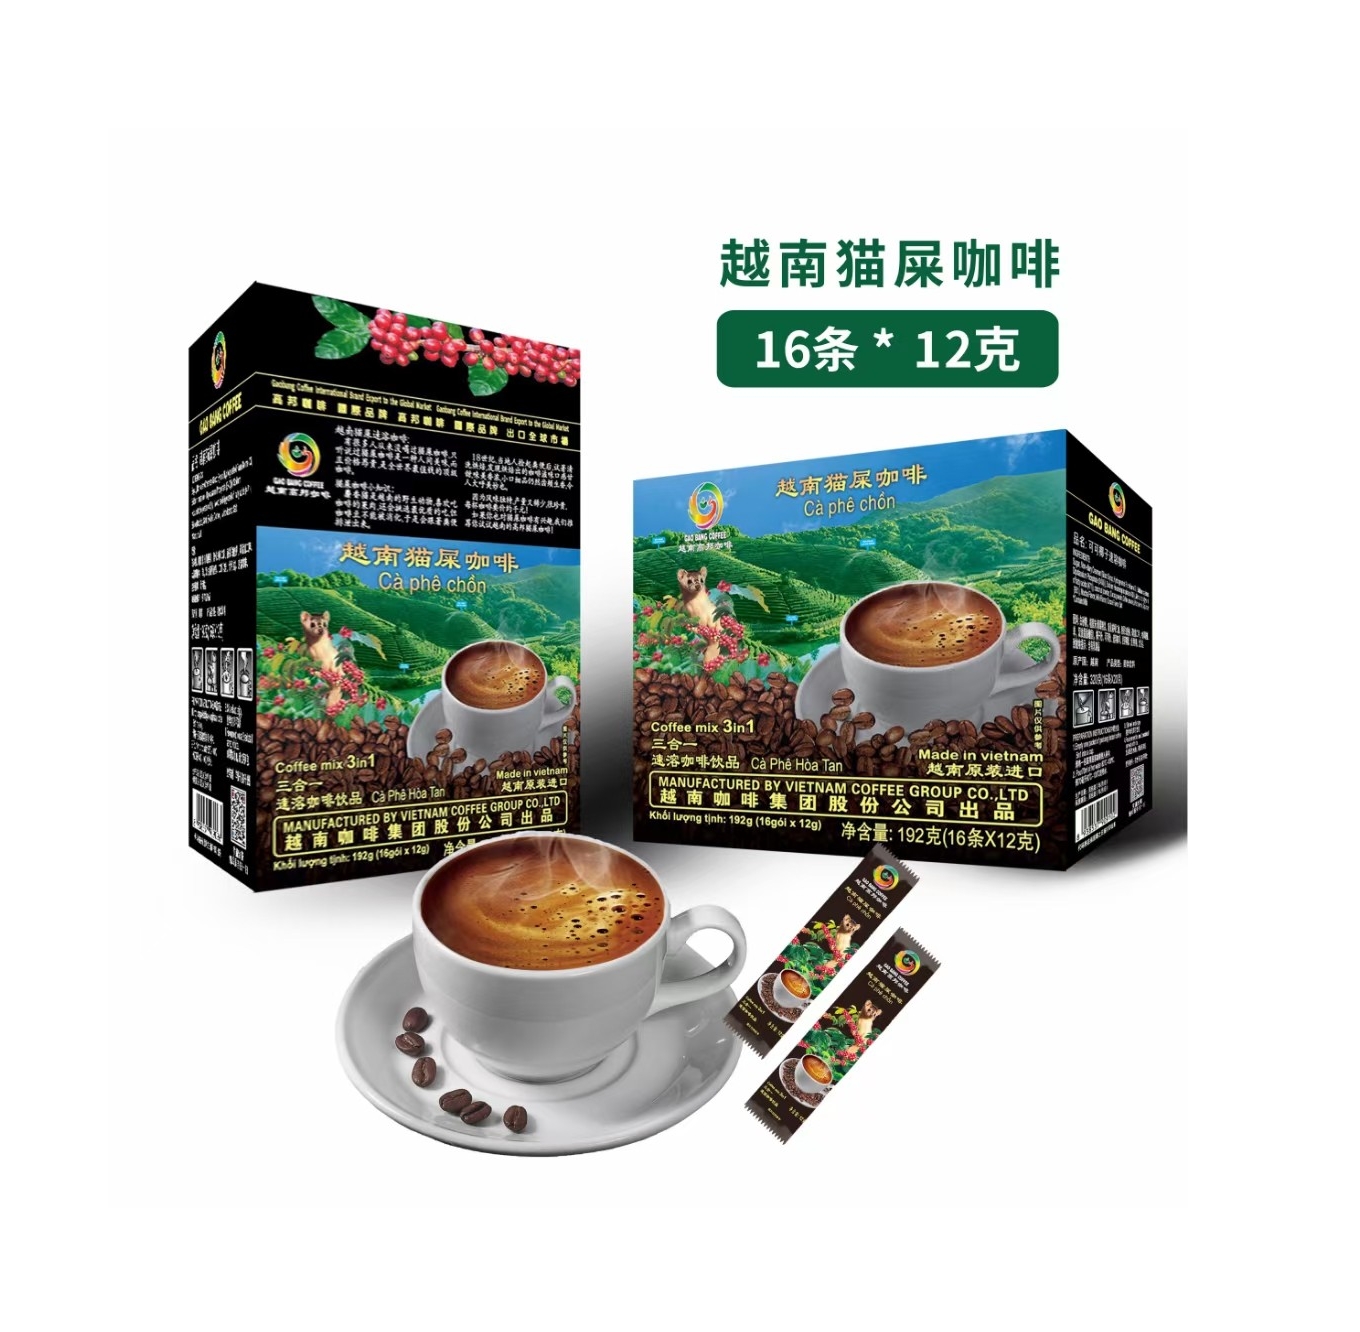 Gaobang 3in1 Coffee Instant Powder 12gram Vietnam